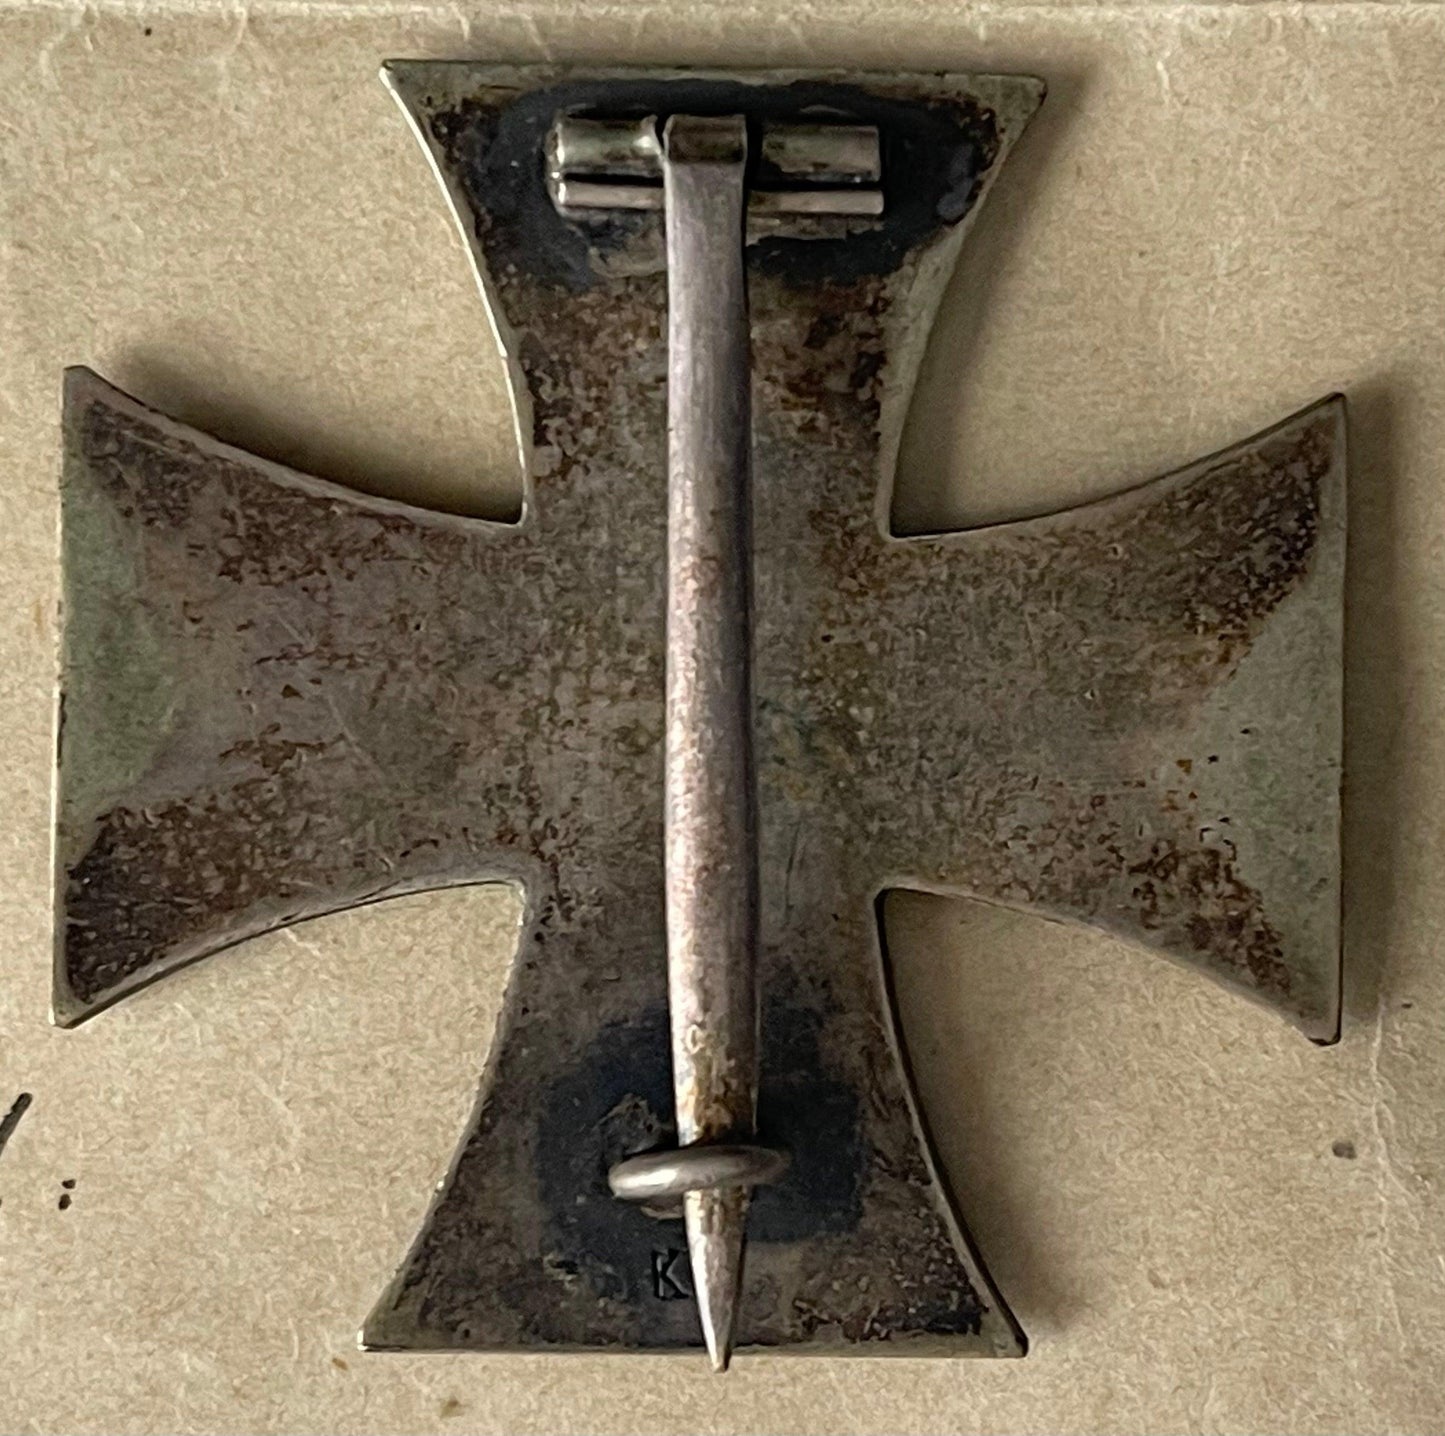 Germany Award and Document 1914 Iron Cross 1st Class Leutnant der Reserve Schmidt - Derrittmeister Militaria